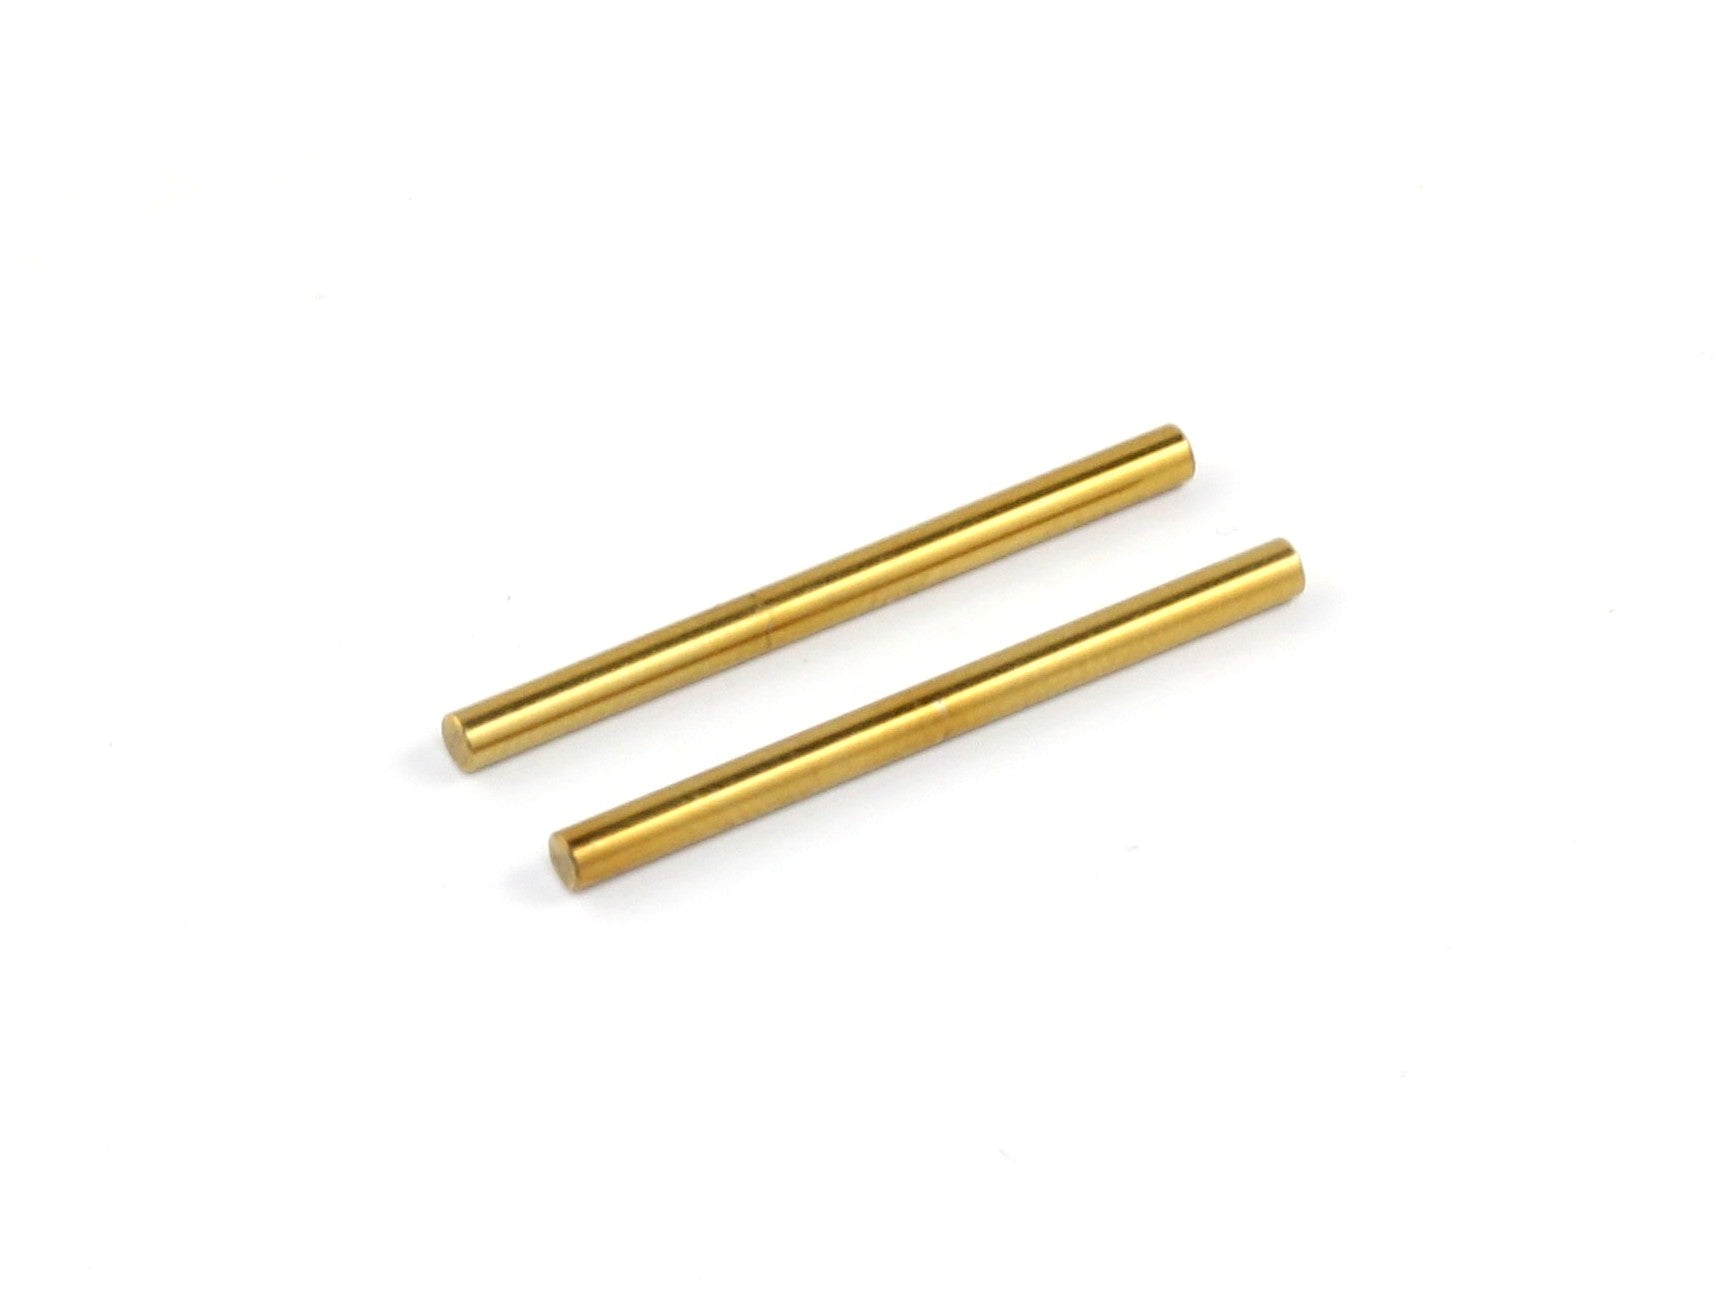 Roche 2mm Upper Hinge Pin, Titanium Coated, 2 pcs for Rapide P12 - Speedy RC